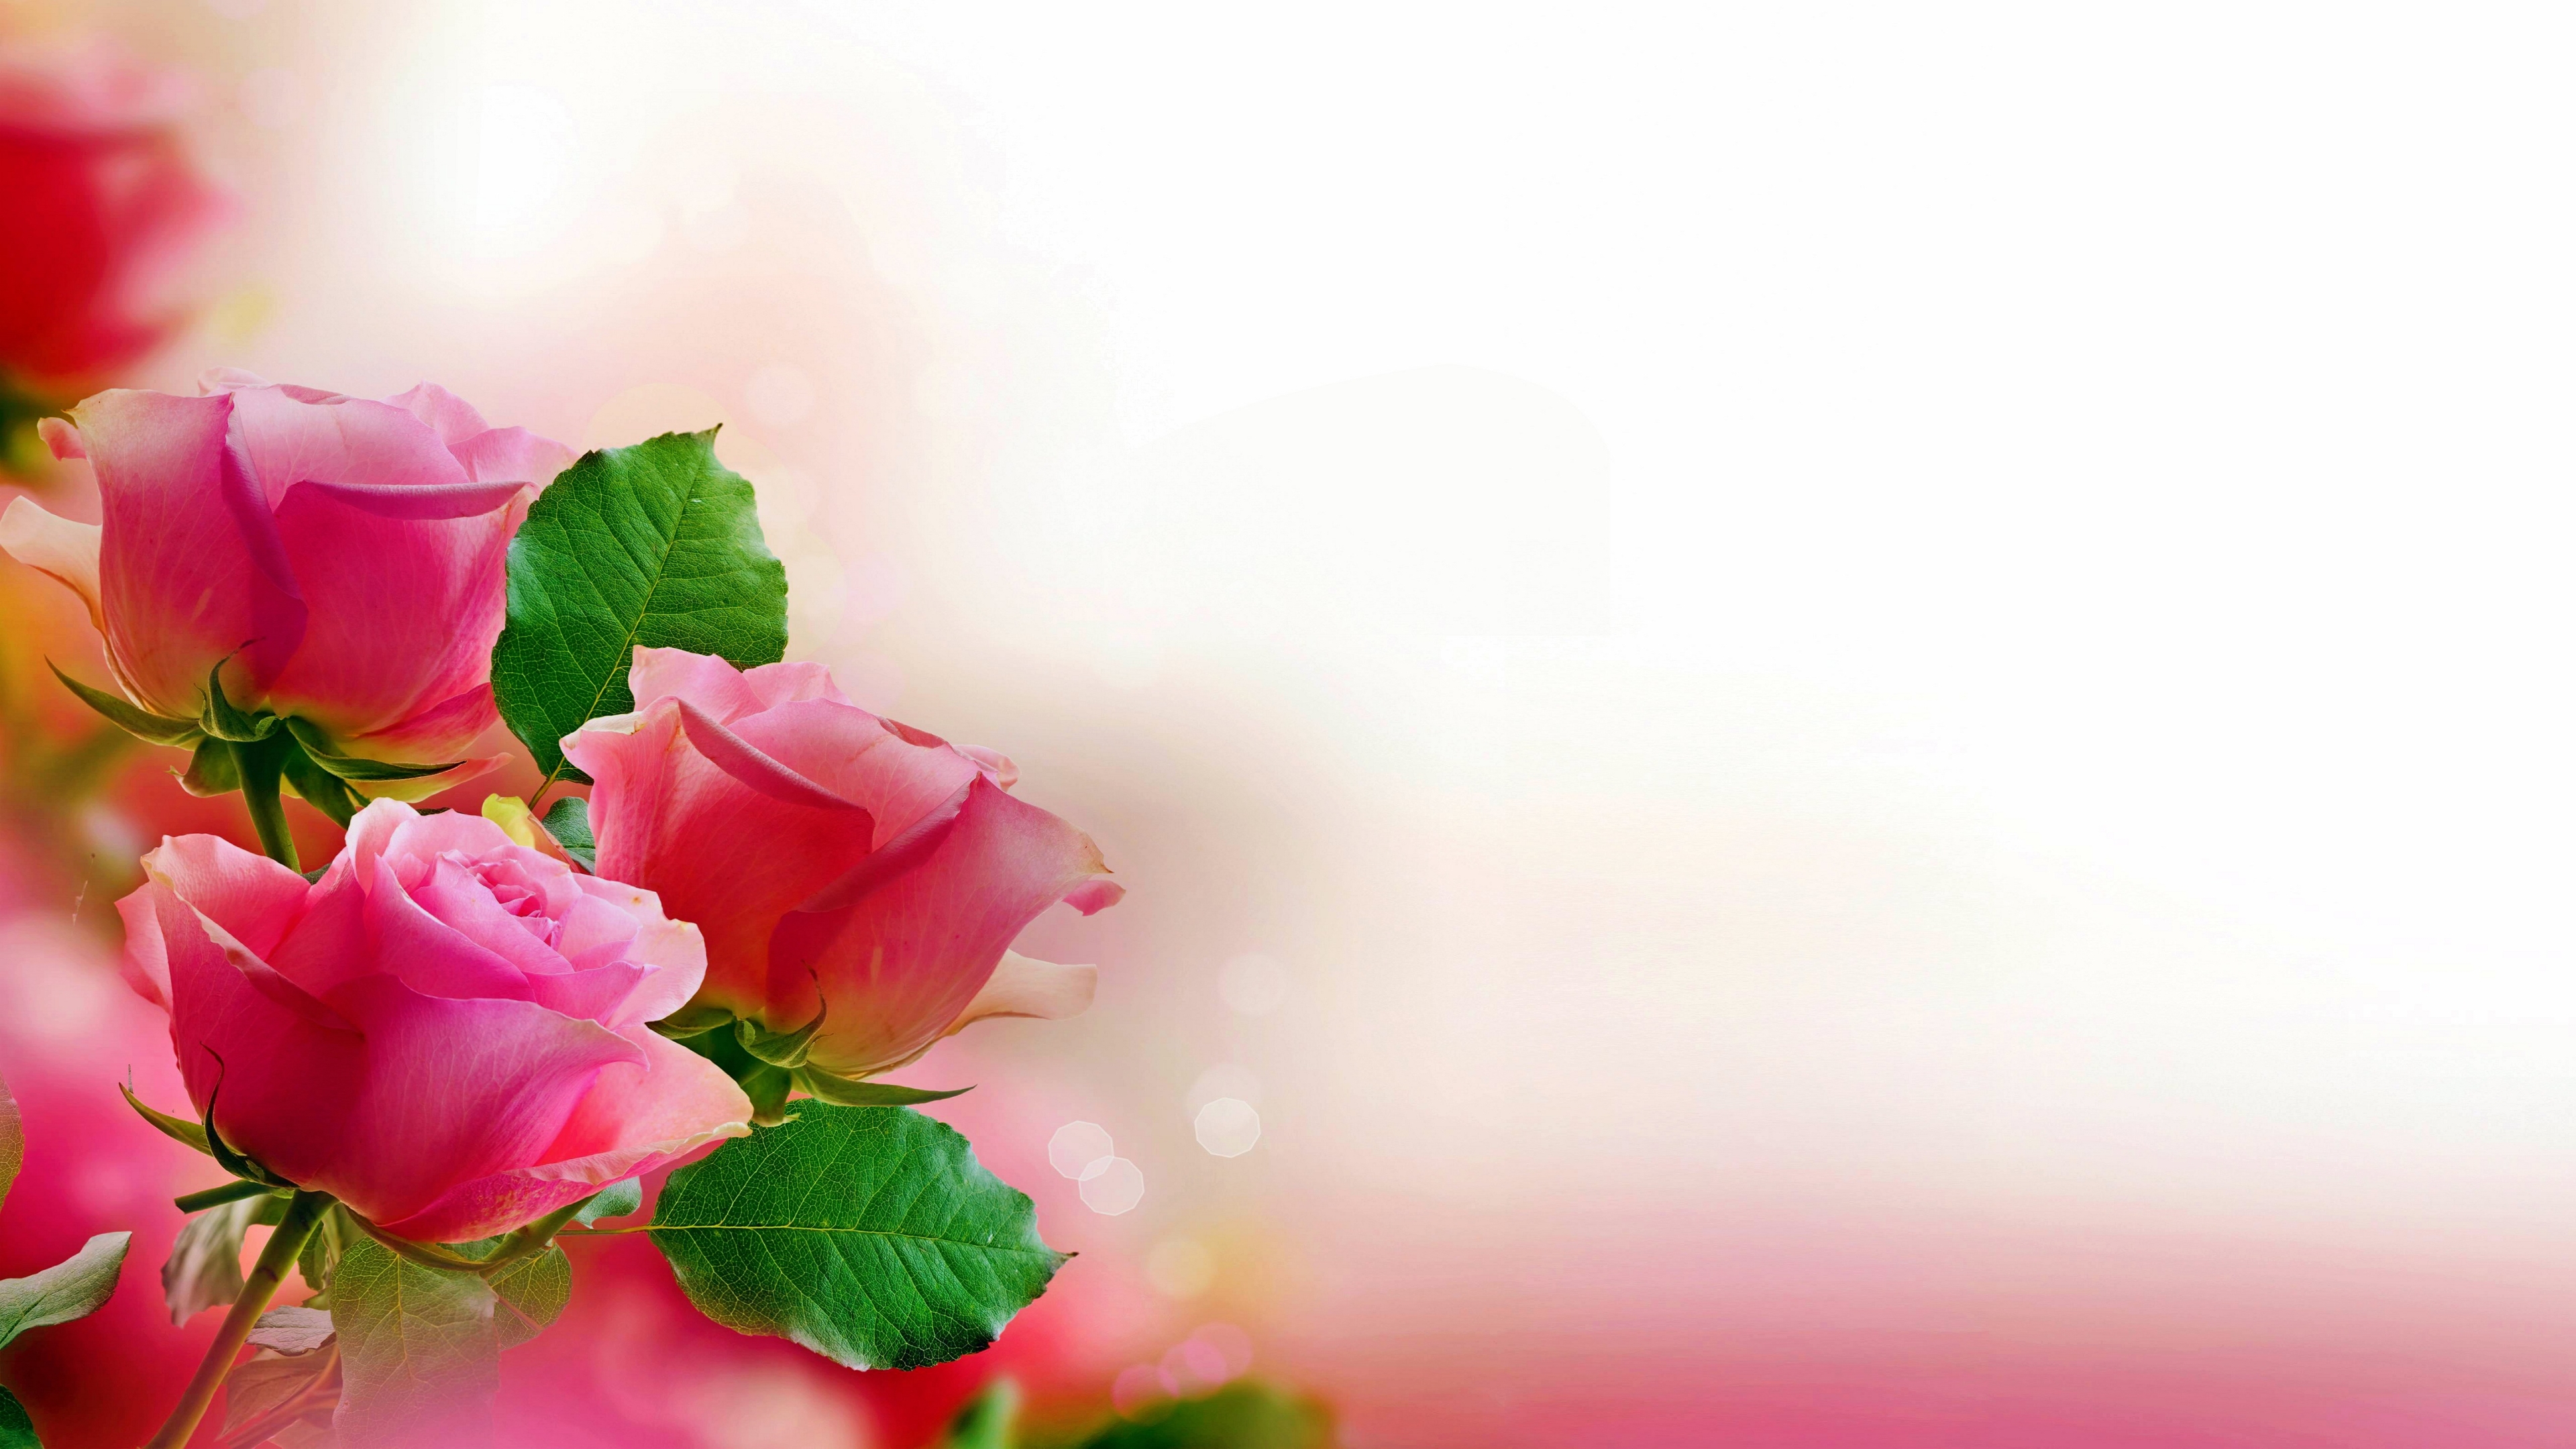 Pink Roses for 3840 x 2160 4K Ultra HDTV resolution